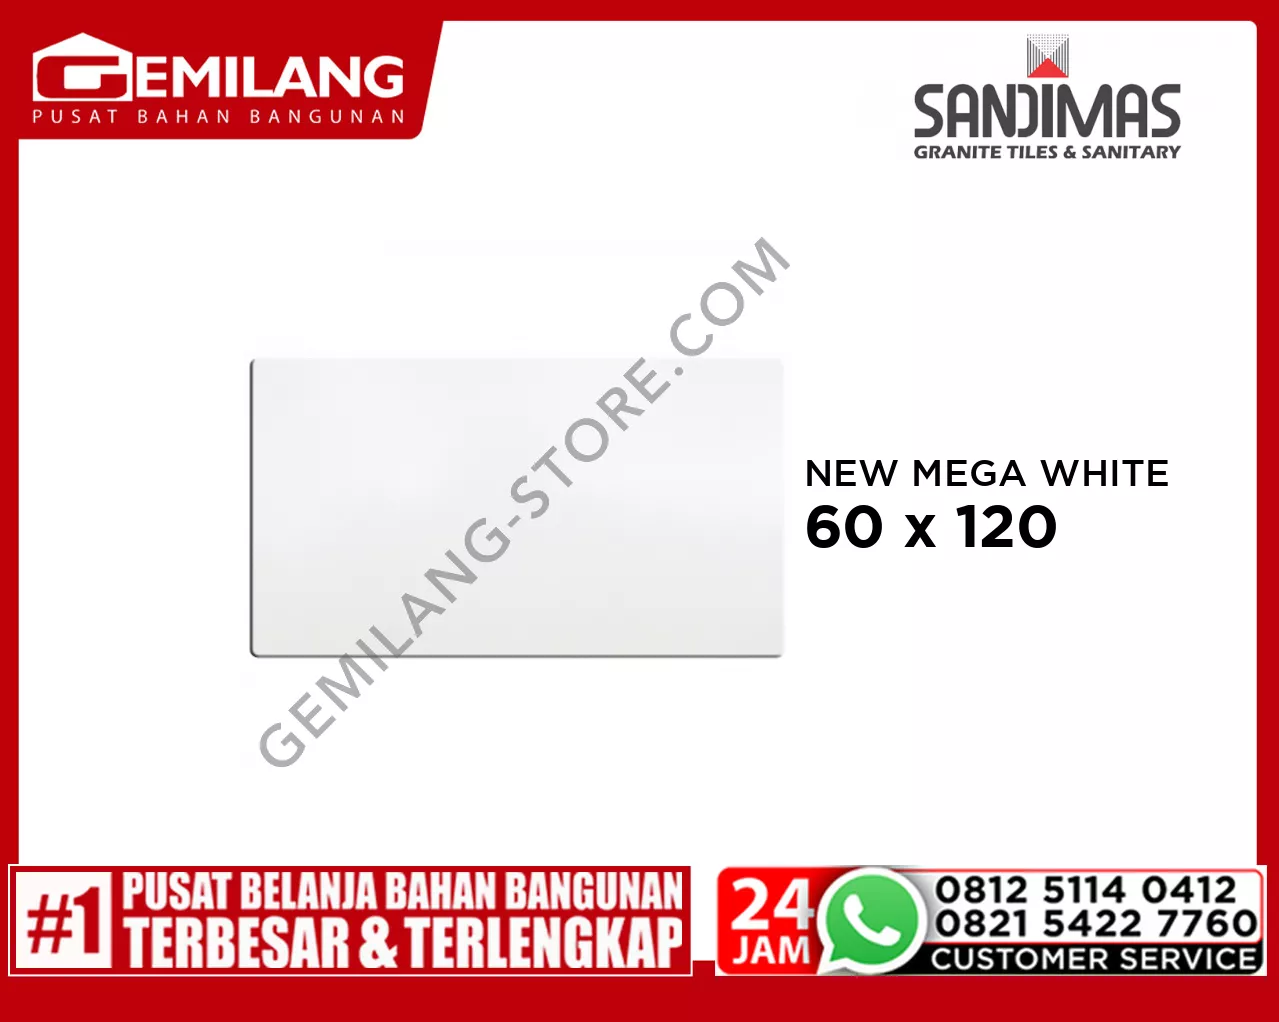 SANDIMAS GRANIT NEW MEGA WHITE 60 x 120